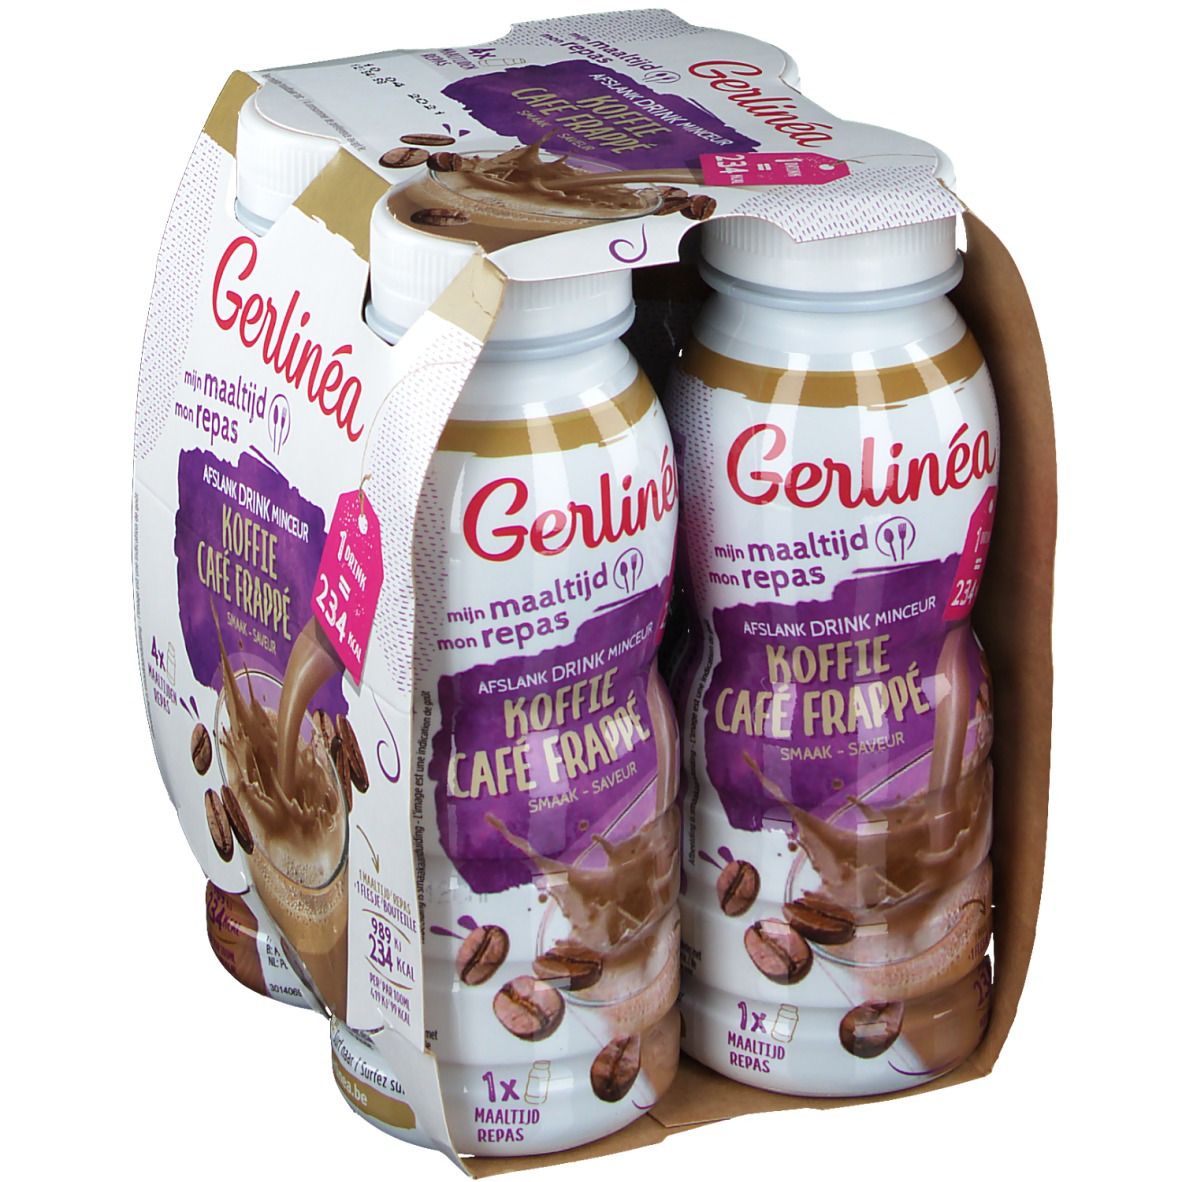 ② Gerlinéa milkshake repas minceur saveur chocolat — Produits